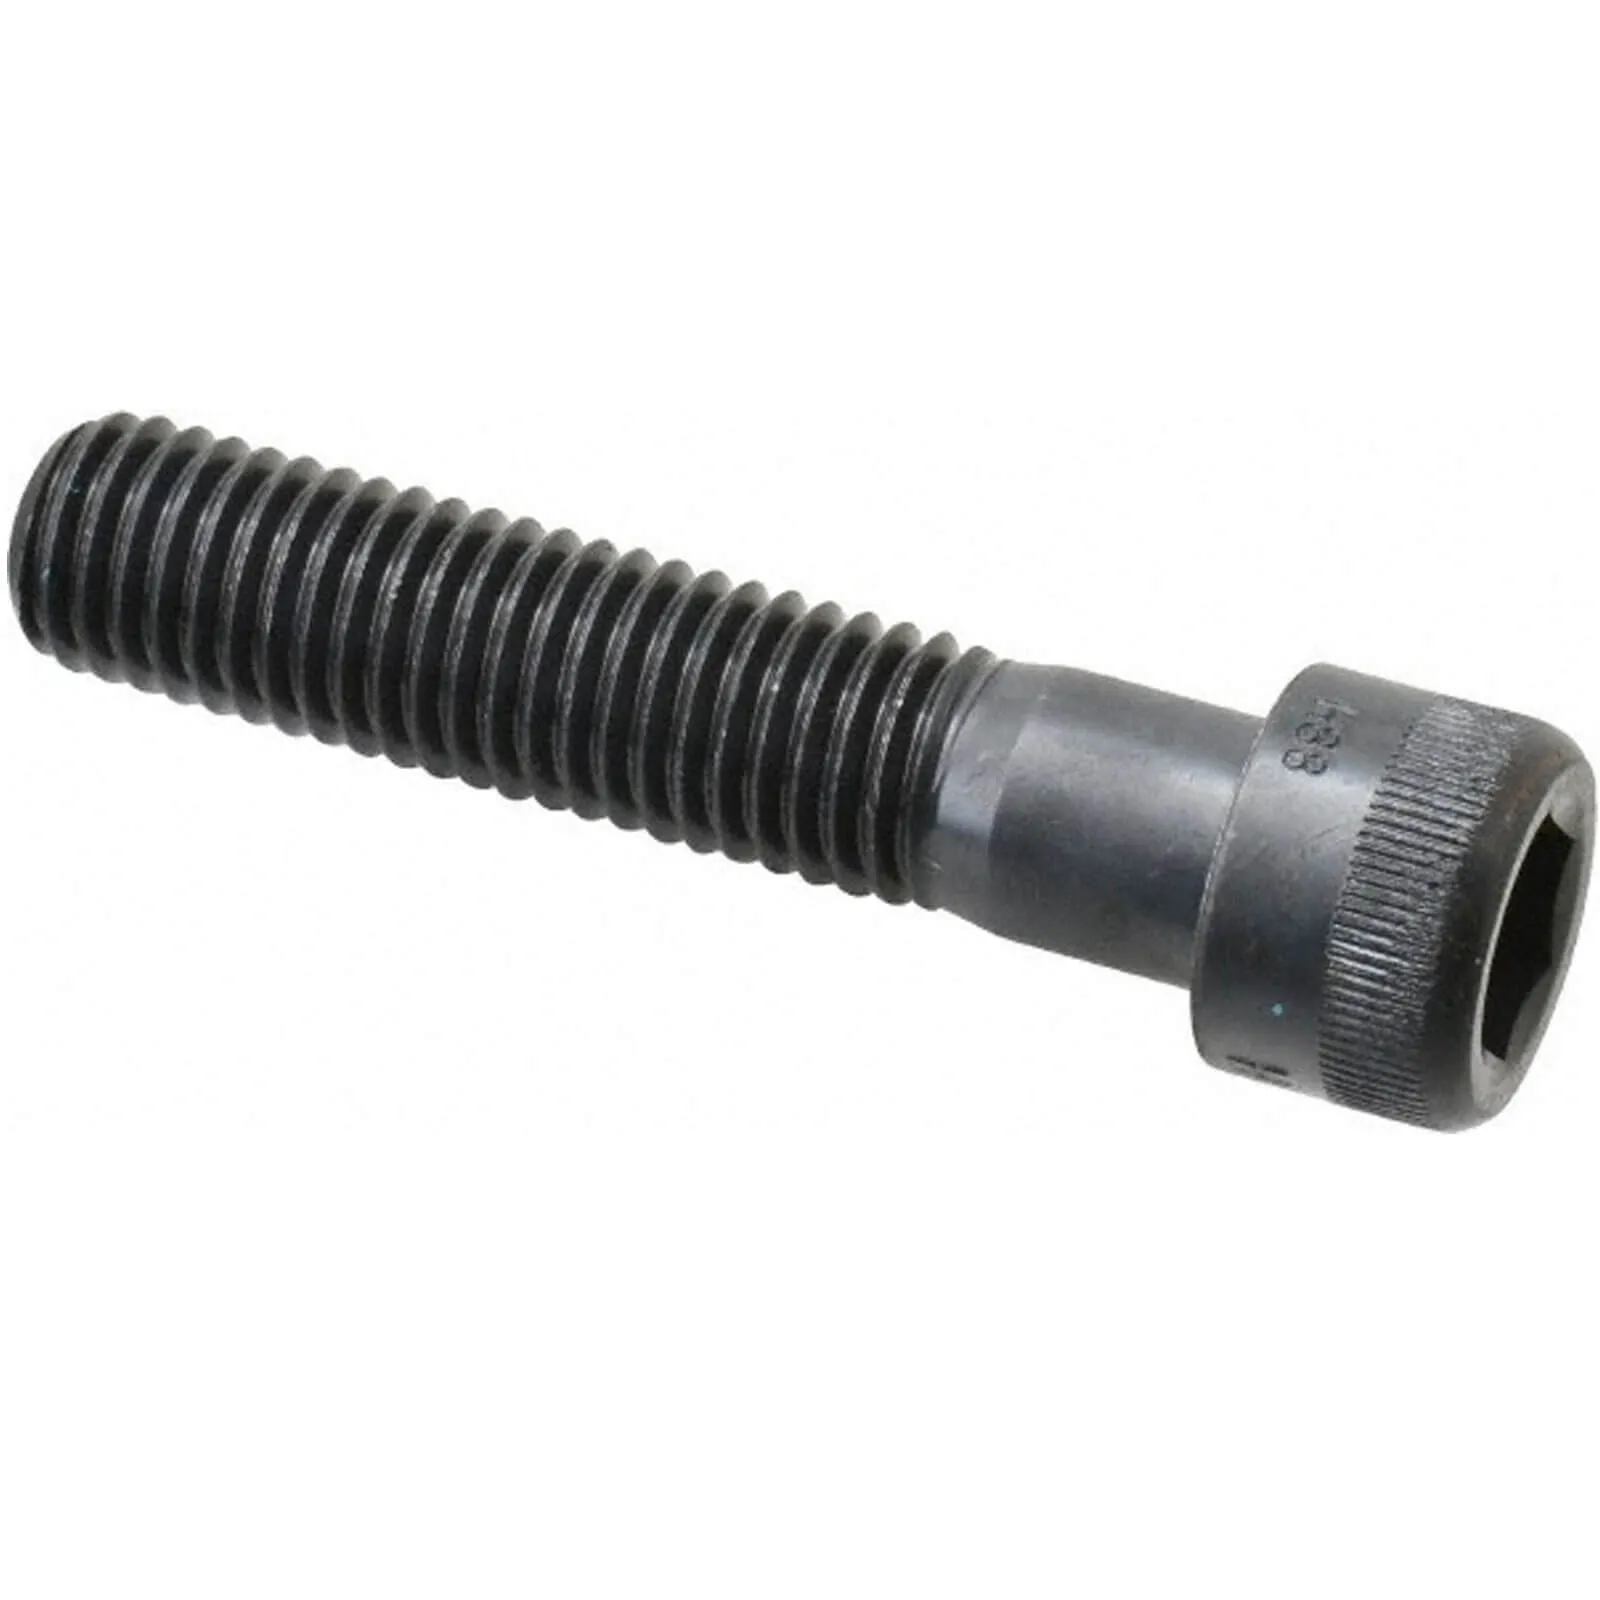 Holo Krome Genuine 12.9 Grade Socket Cap Screws - M12, 200mm, Pack of 10